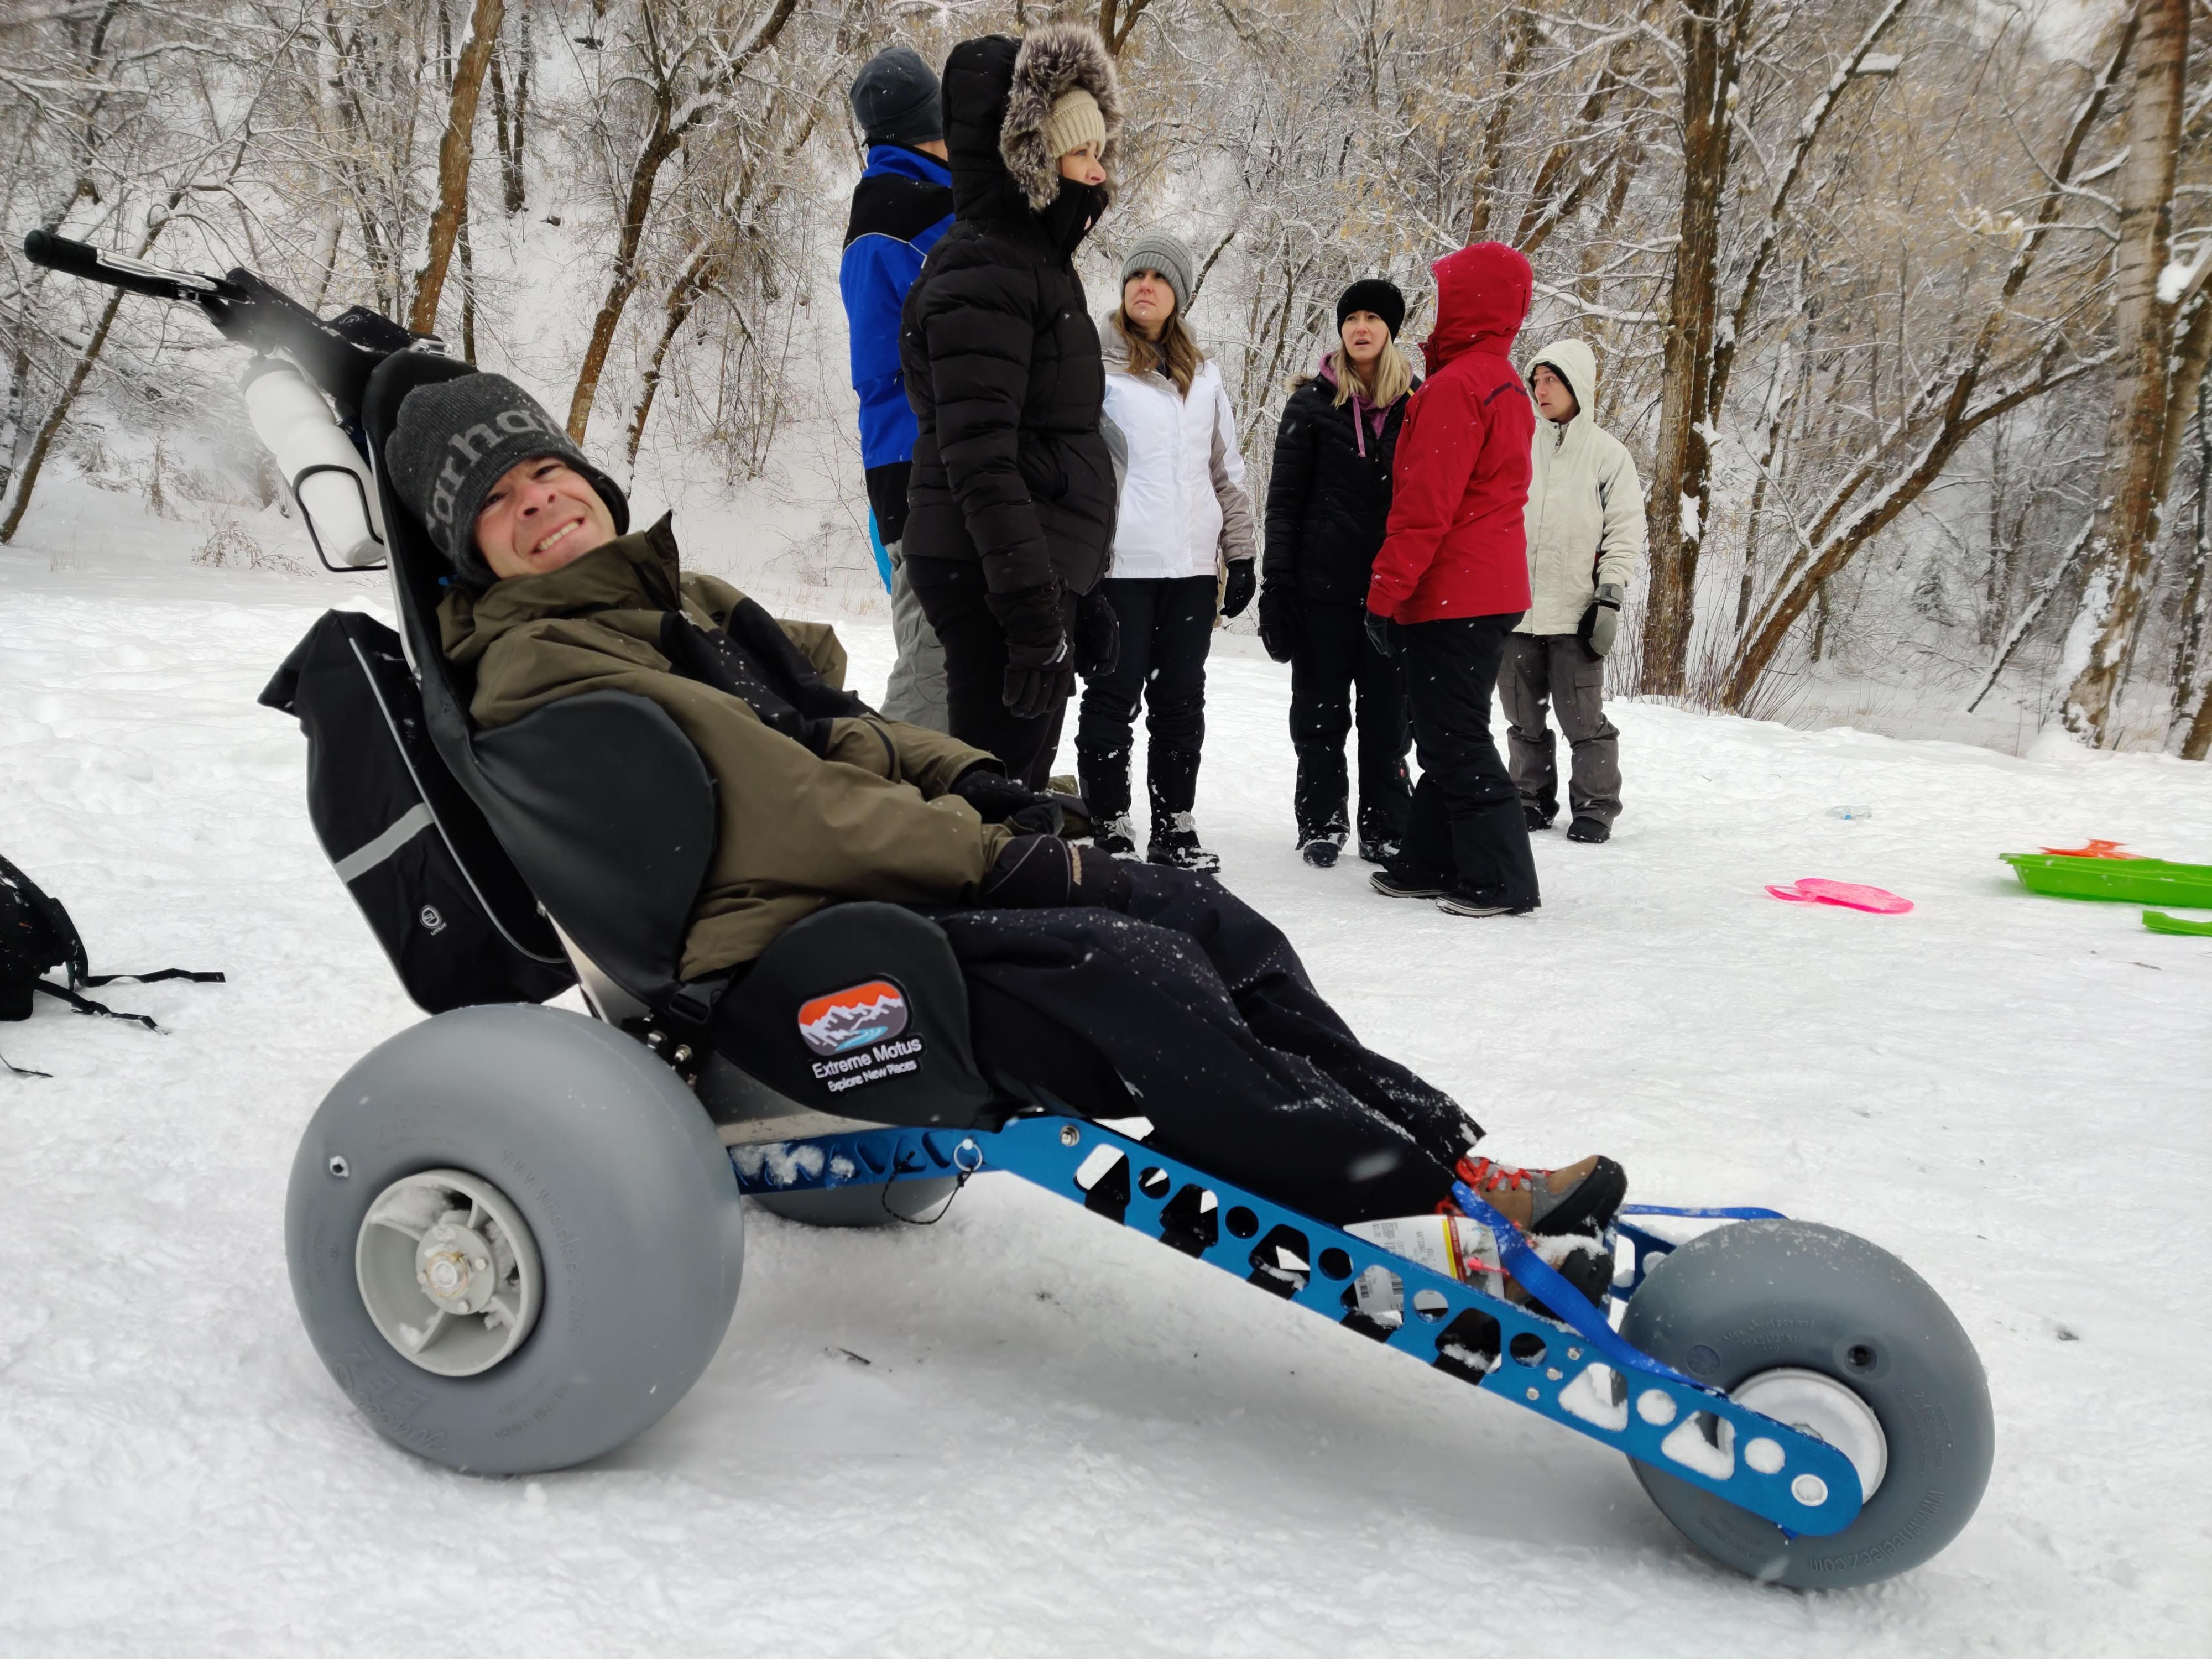 Extreme Motus All Terrain Wheelchair at the sledding hill